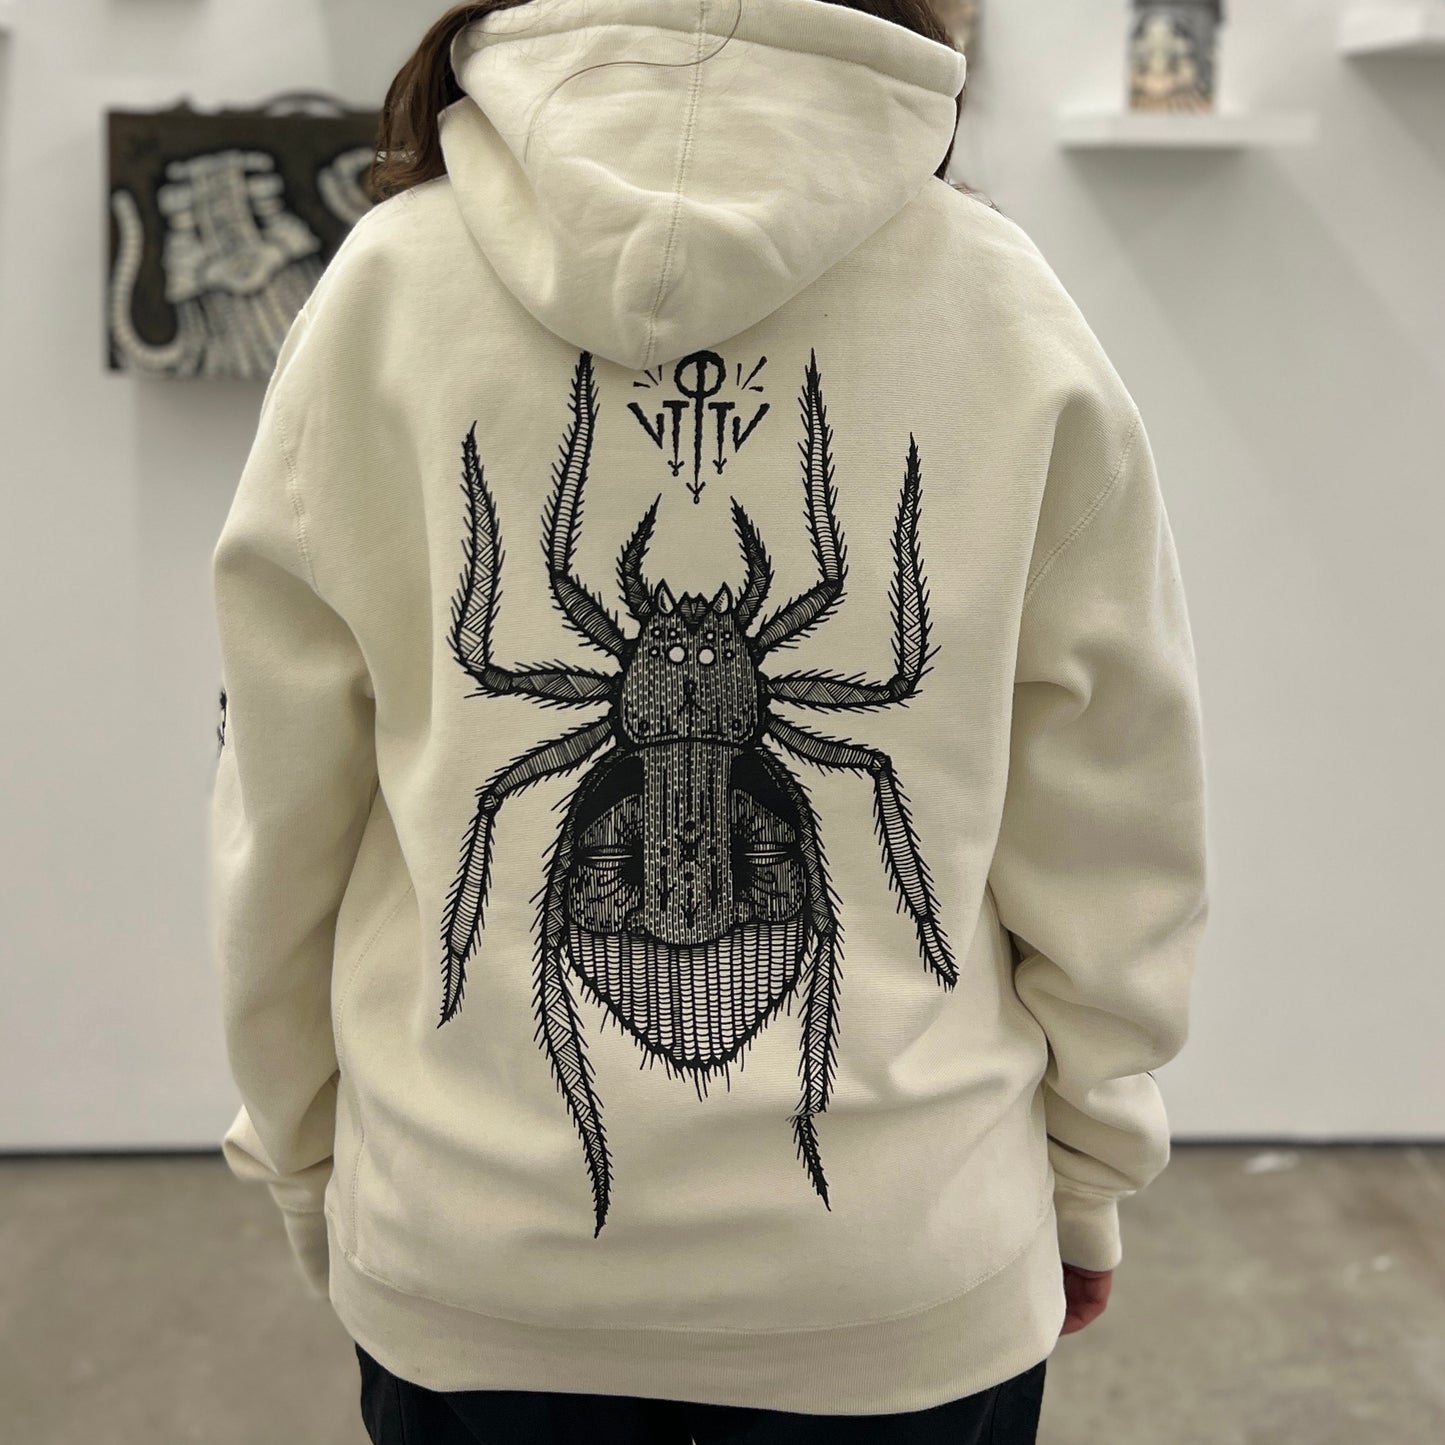  by GATS titled GATS - "Arachnophile" Hooded Sweatshirt in Bone